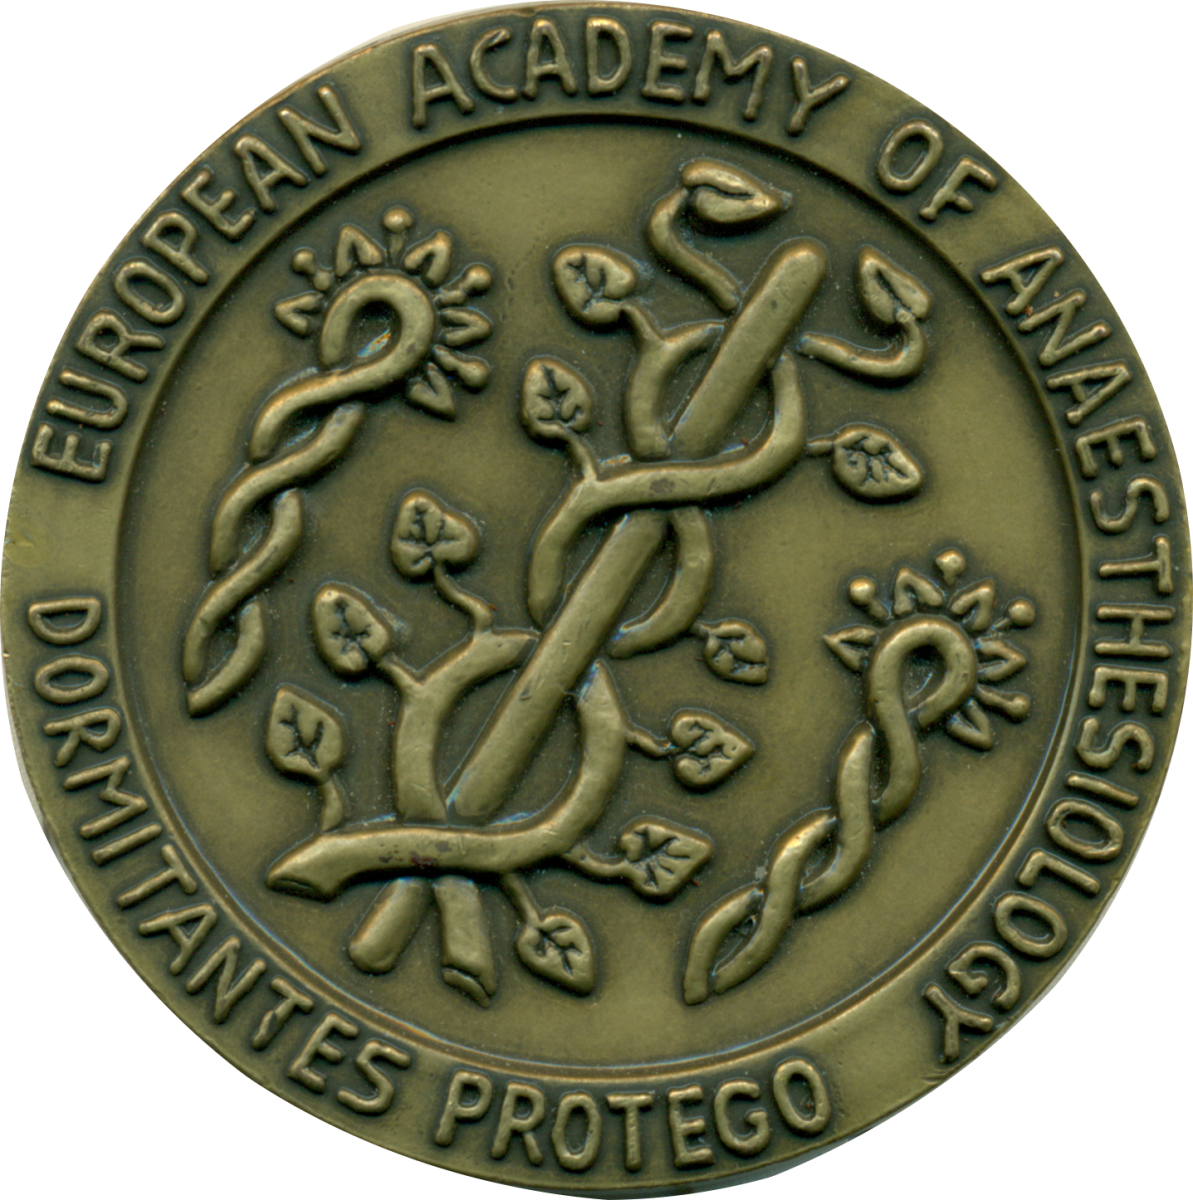 Fotografia de la medalla dissenyada pel Prof.F.Nalda president del 8th Annual Scientific Meeting of the European Academy of Anaesthesiology celebrat a Barcelona, 1986.